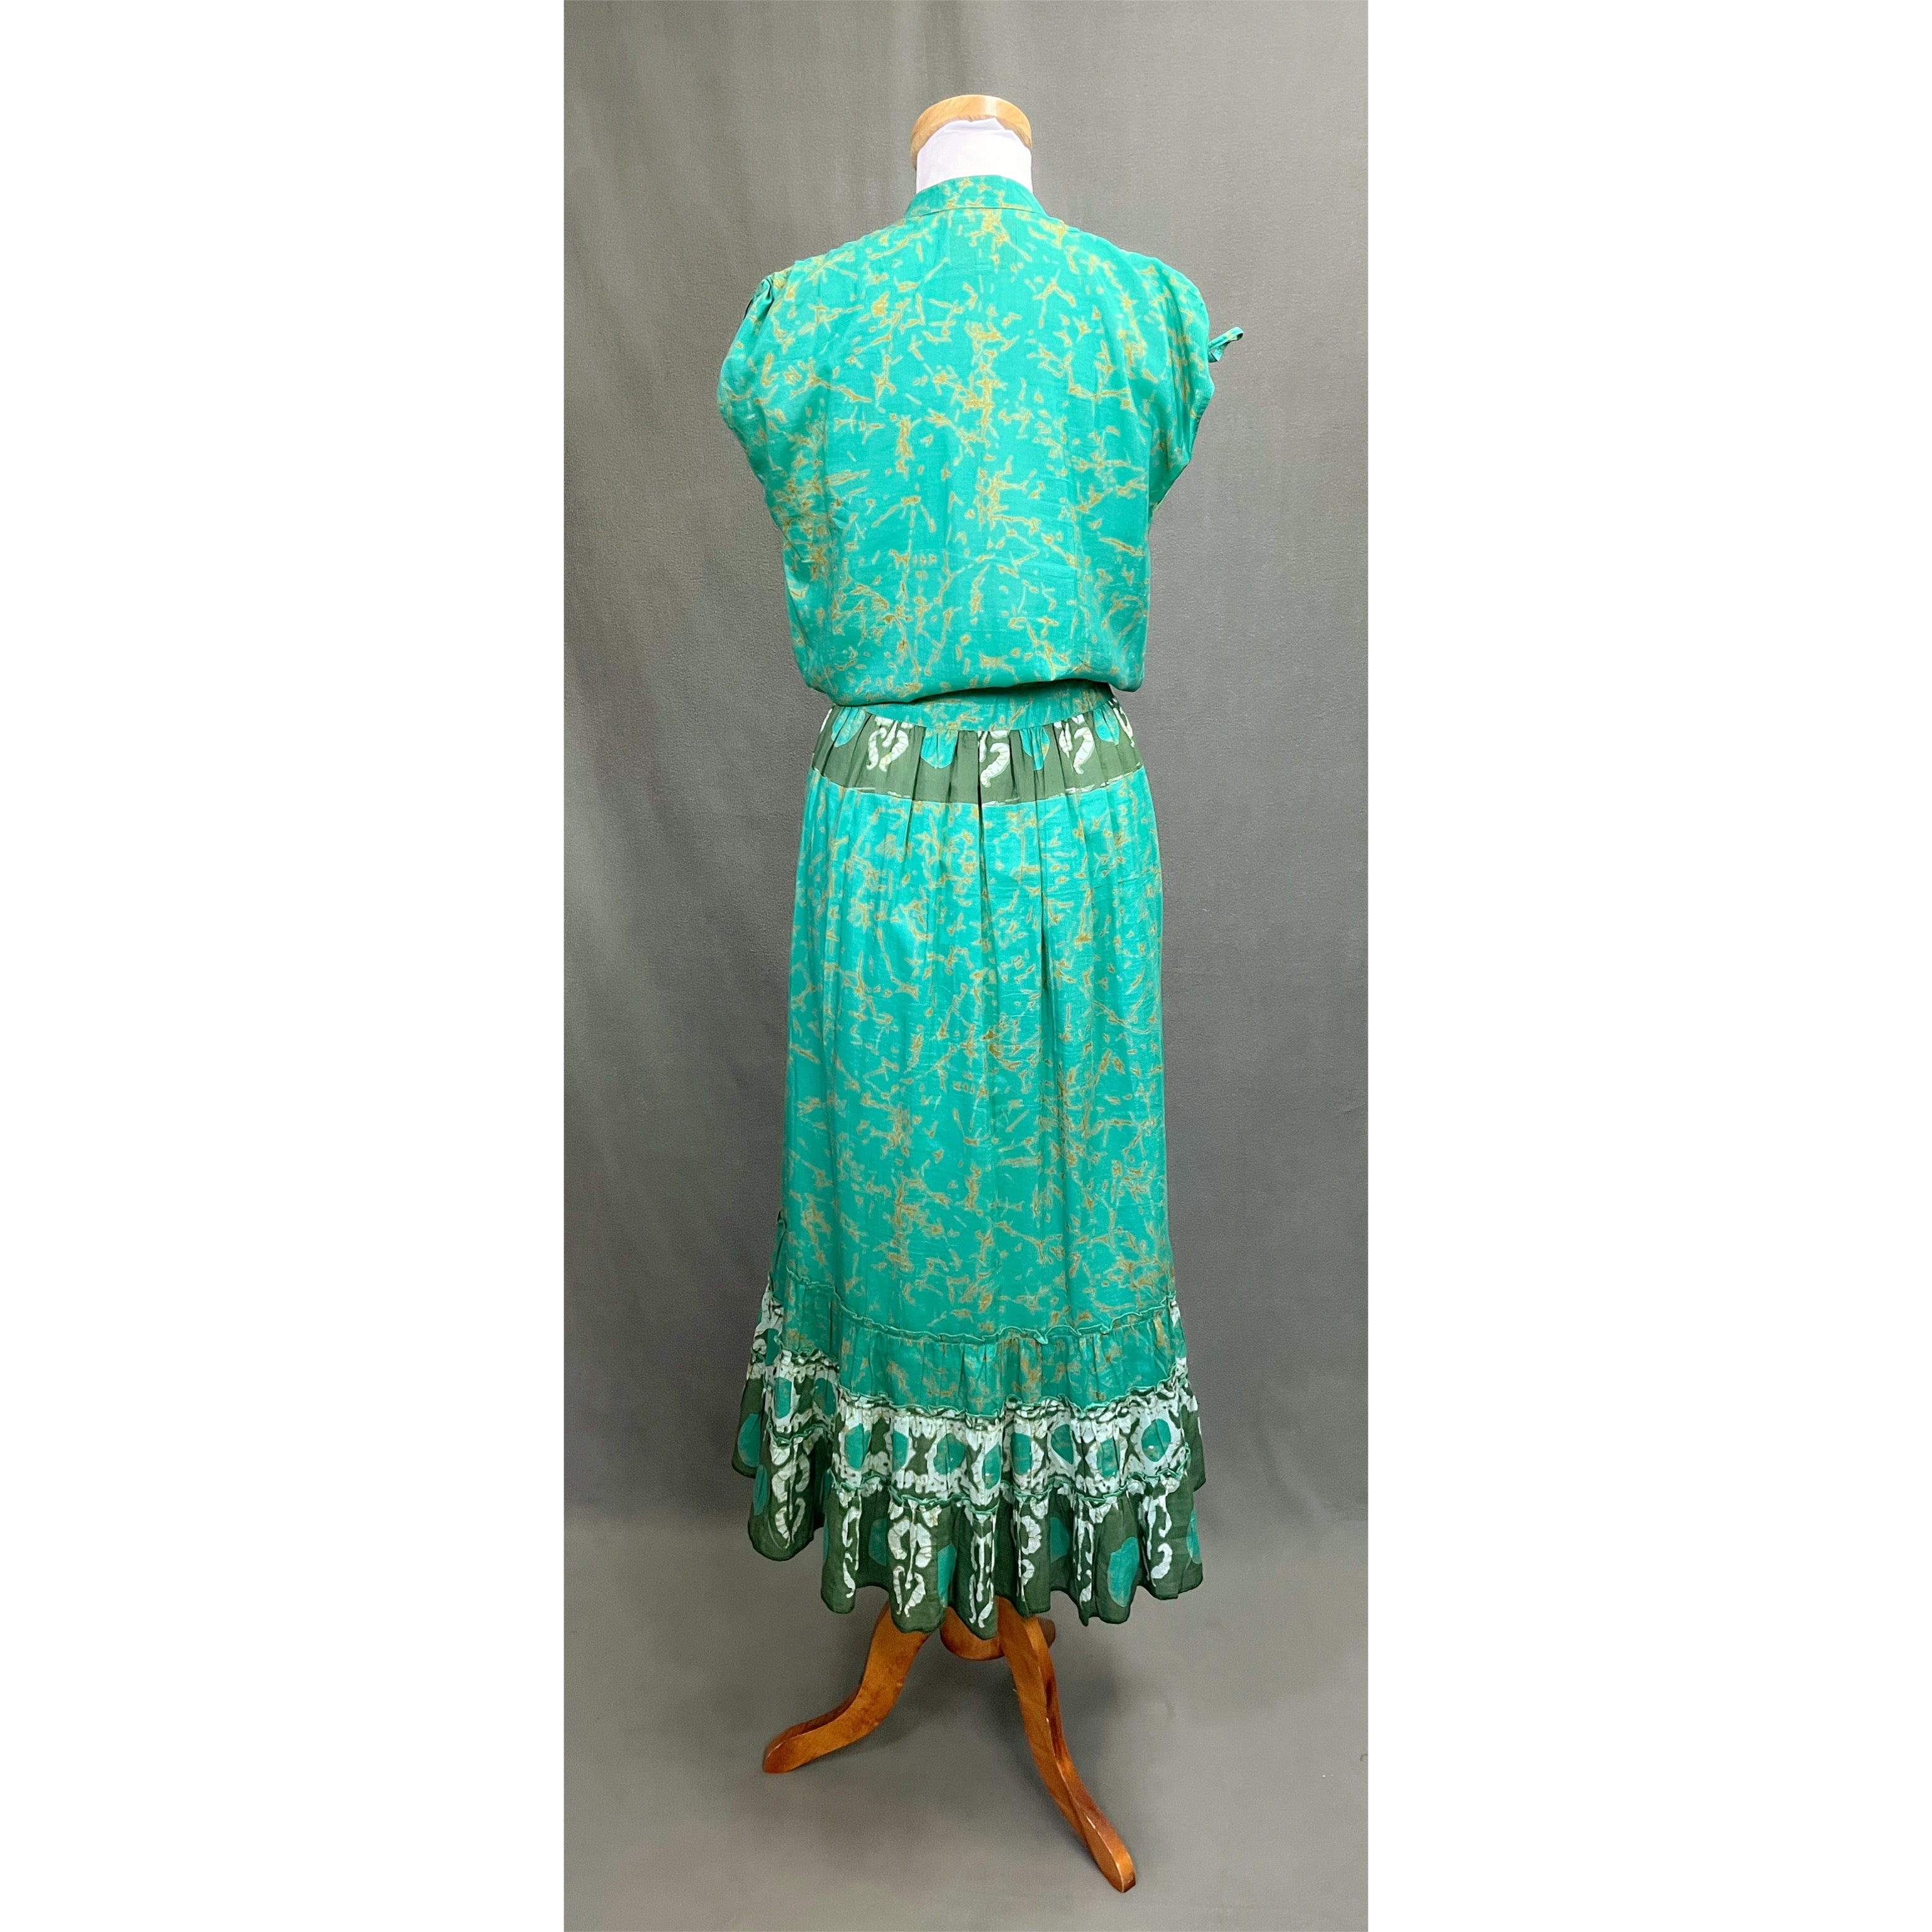 Bell green print dress, size S